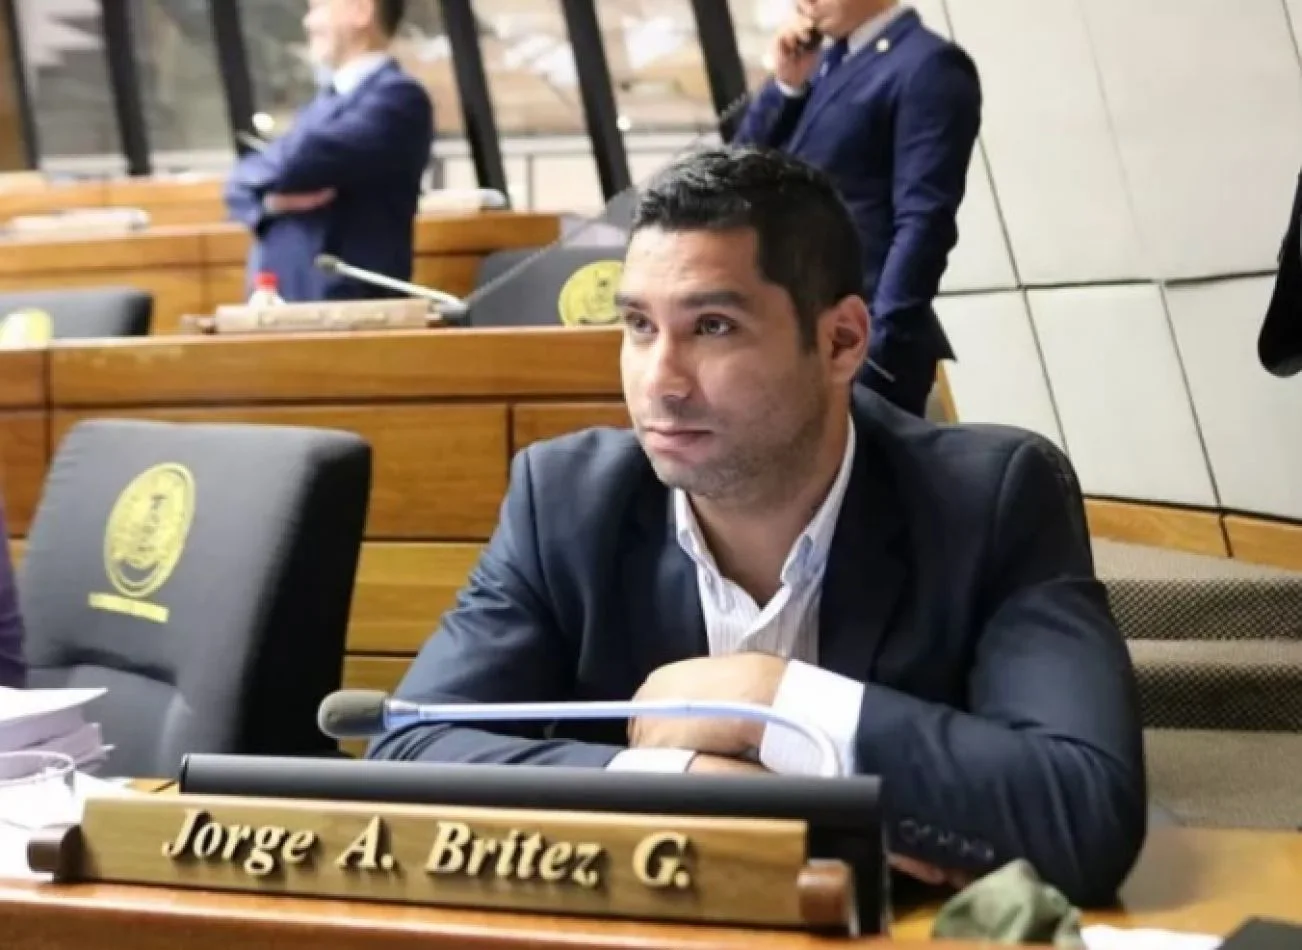 El diputado paraguayo, Jorge Brítez González manifestó una insólita idea acerca de los robos.